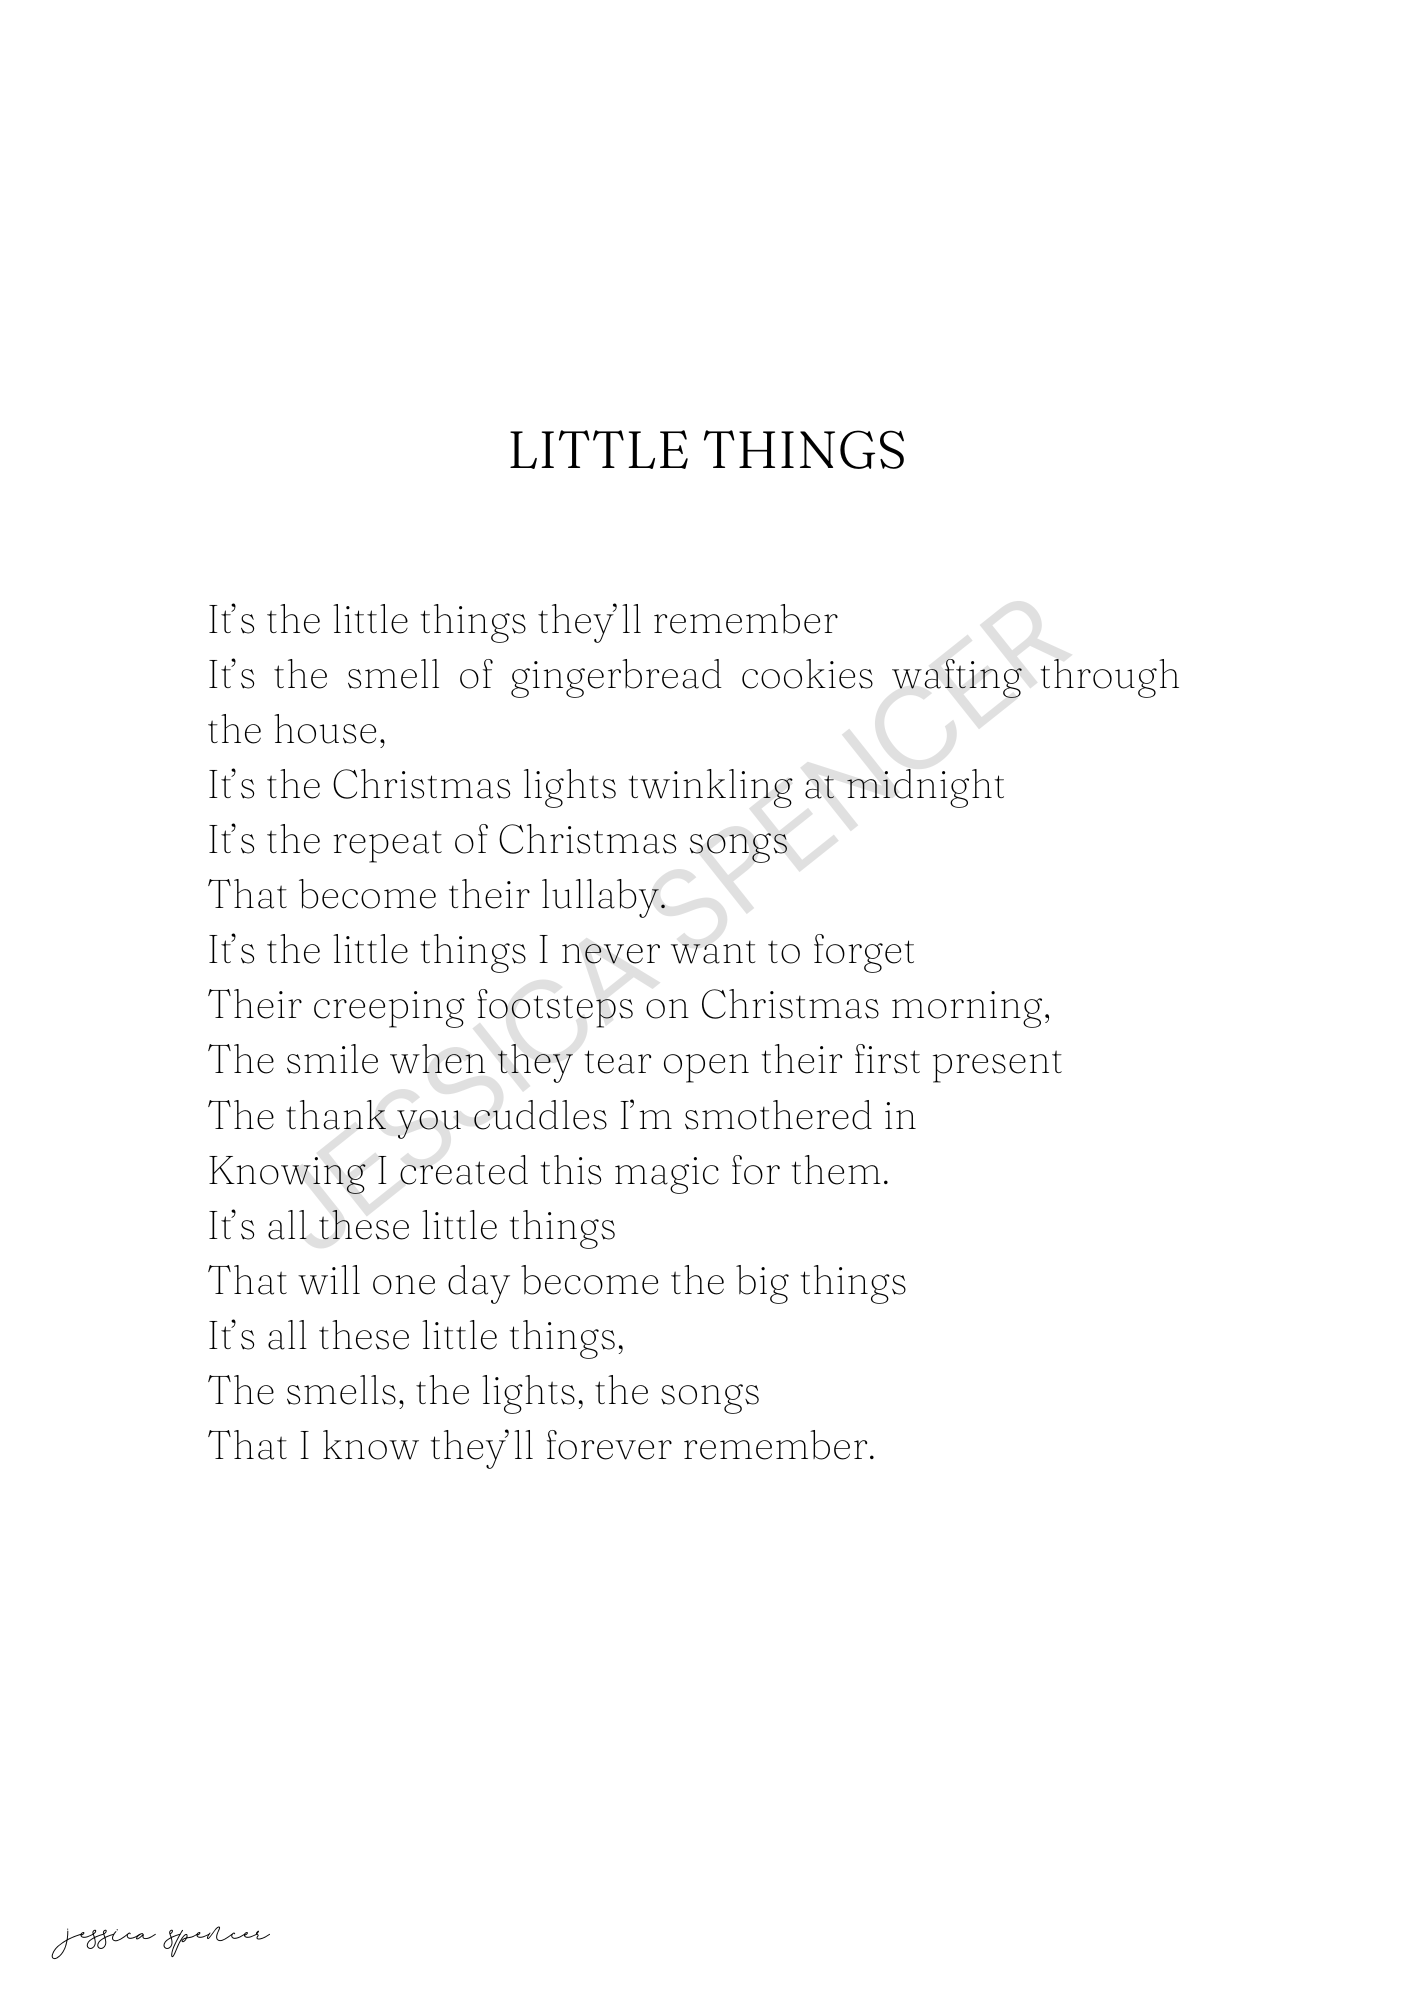 Little Things (Christmas Poem)